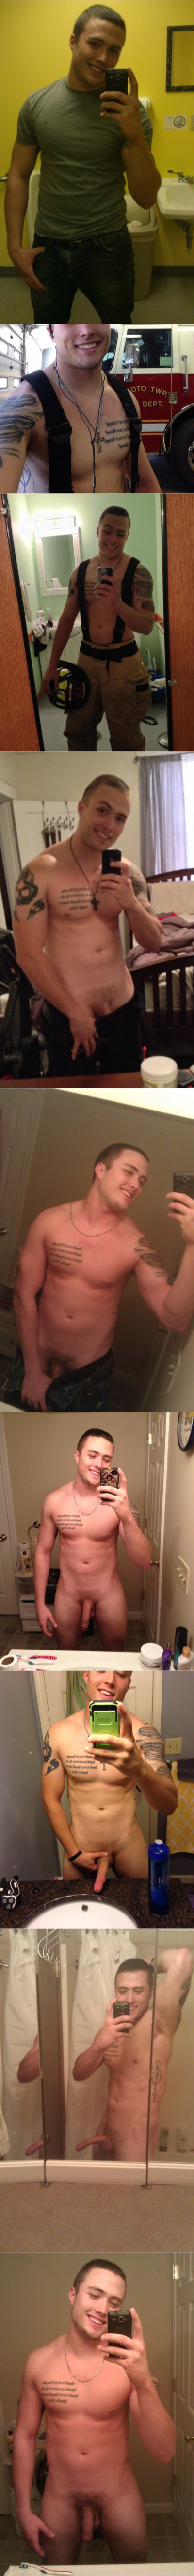 straight-guy-naked-selfies-soft-hard-dick